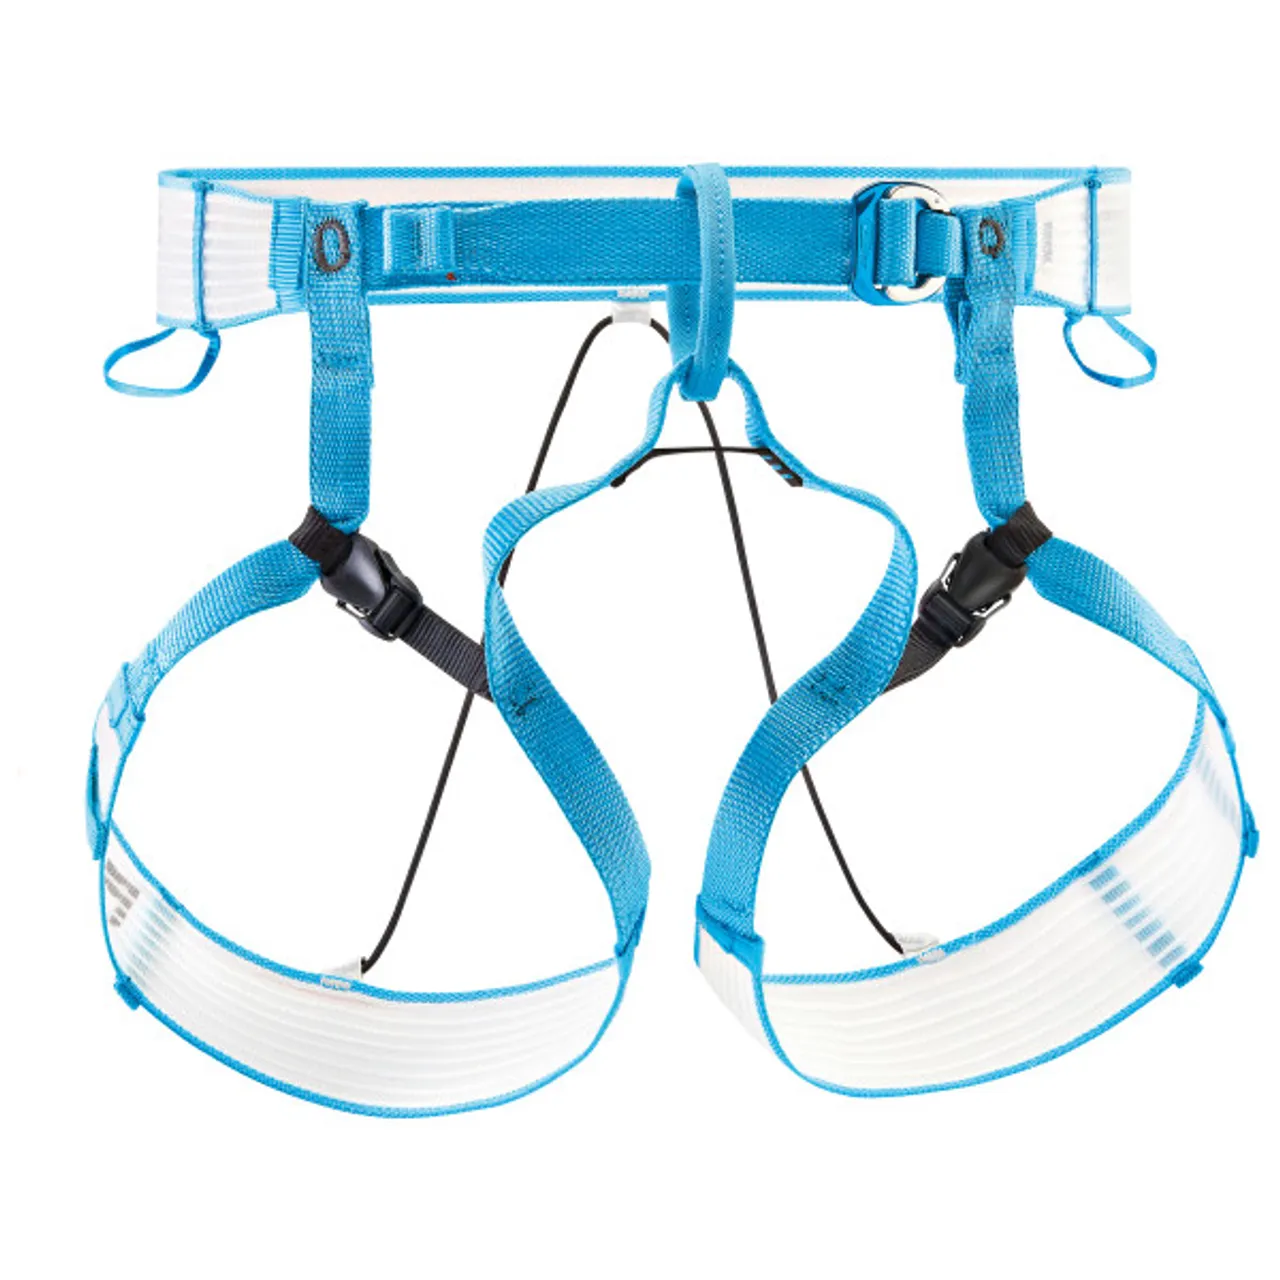 Petzl - Altitude - Climbing harness size S/M, white/blue